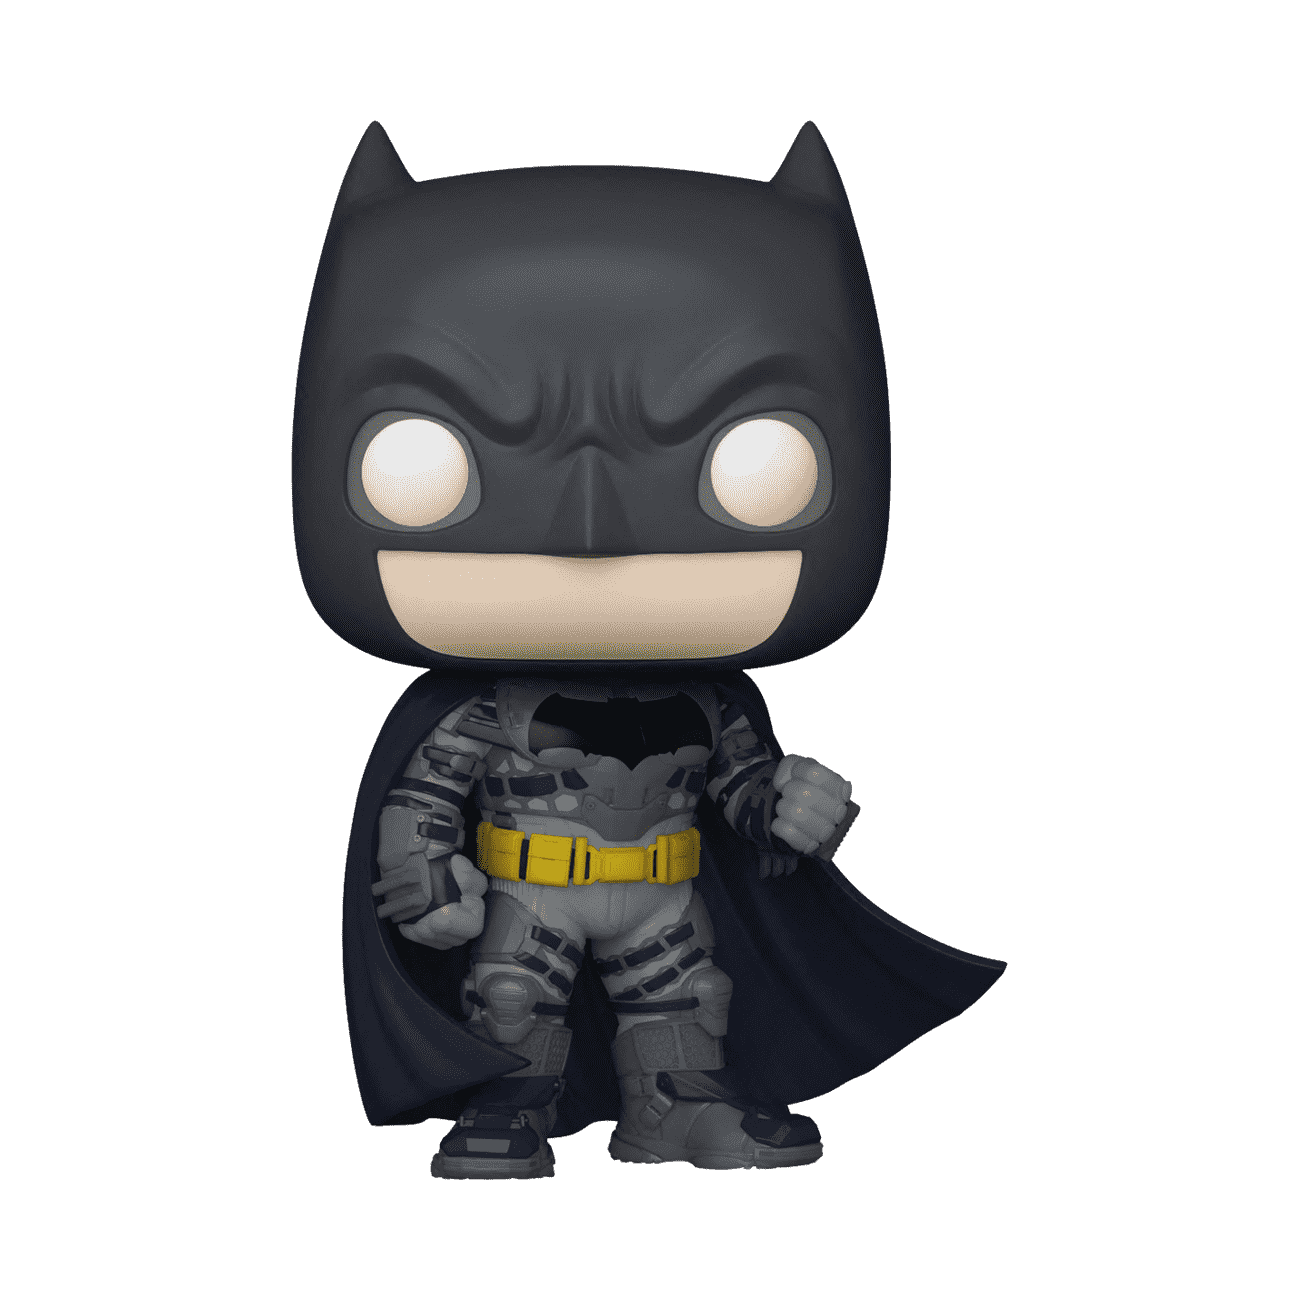 Buy Pop! Batman in Armor Suit at Funko.